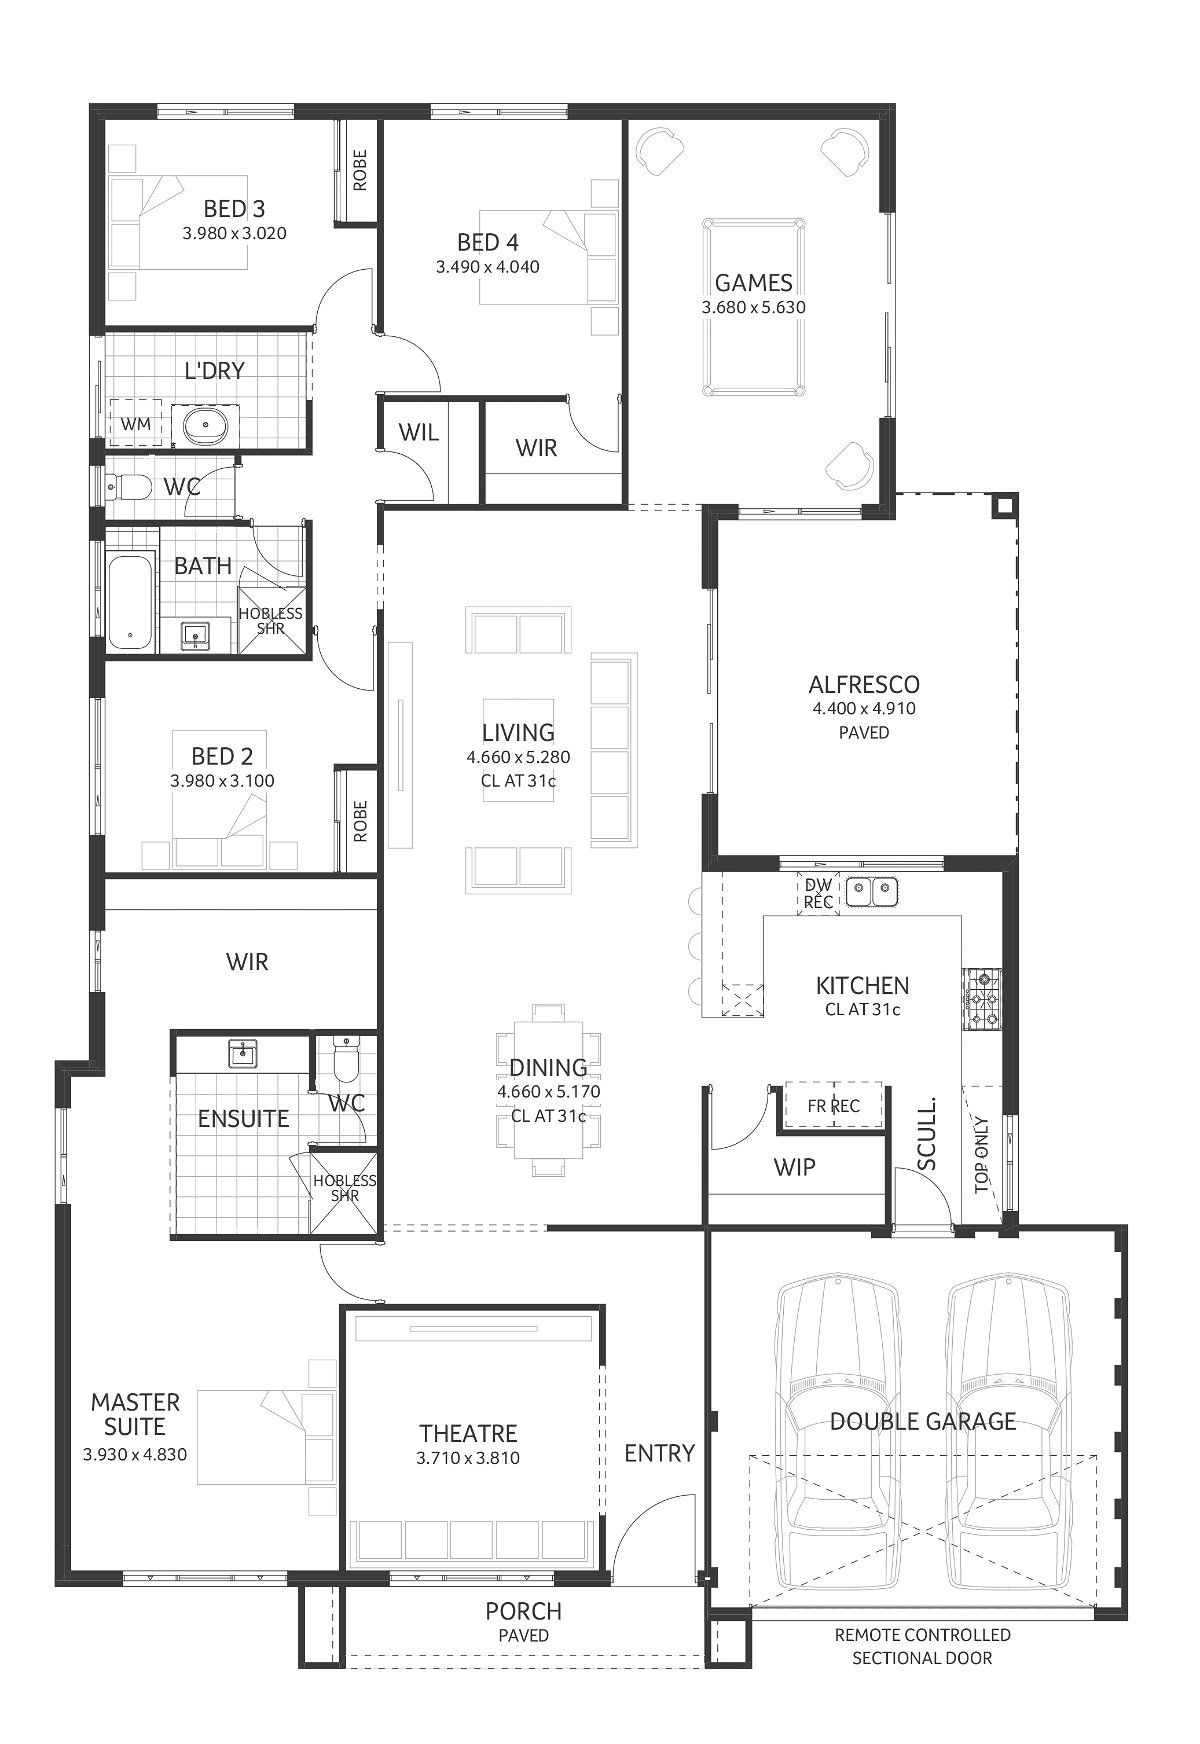 Plunkett Homes - Jolimont | Contemporary - Floorplan - Jolimont Luxe Contemporary Marketing Plan Cropped Jpg